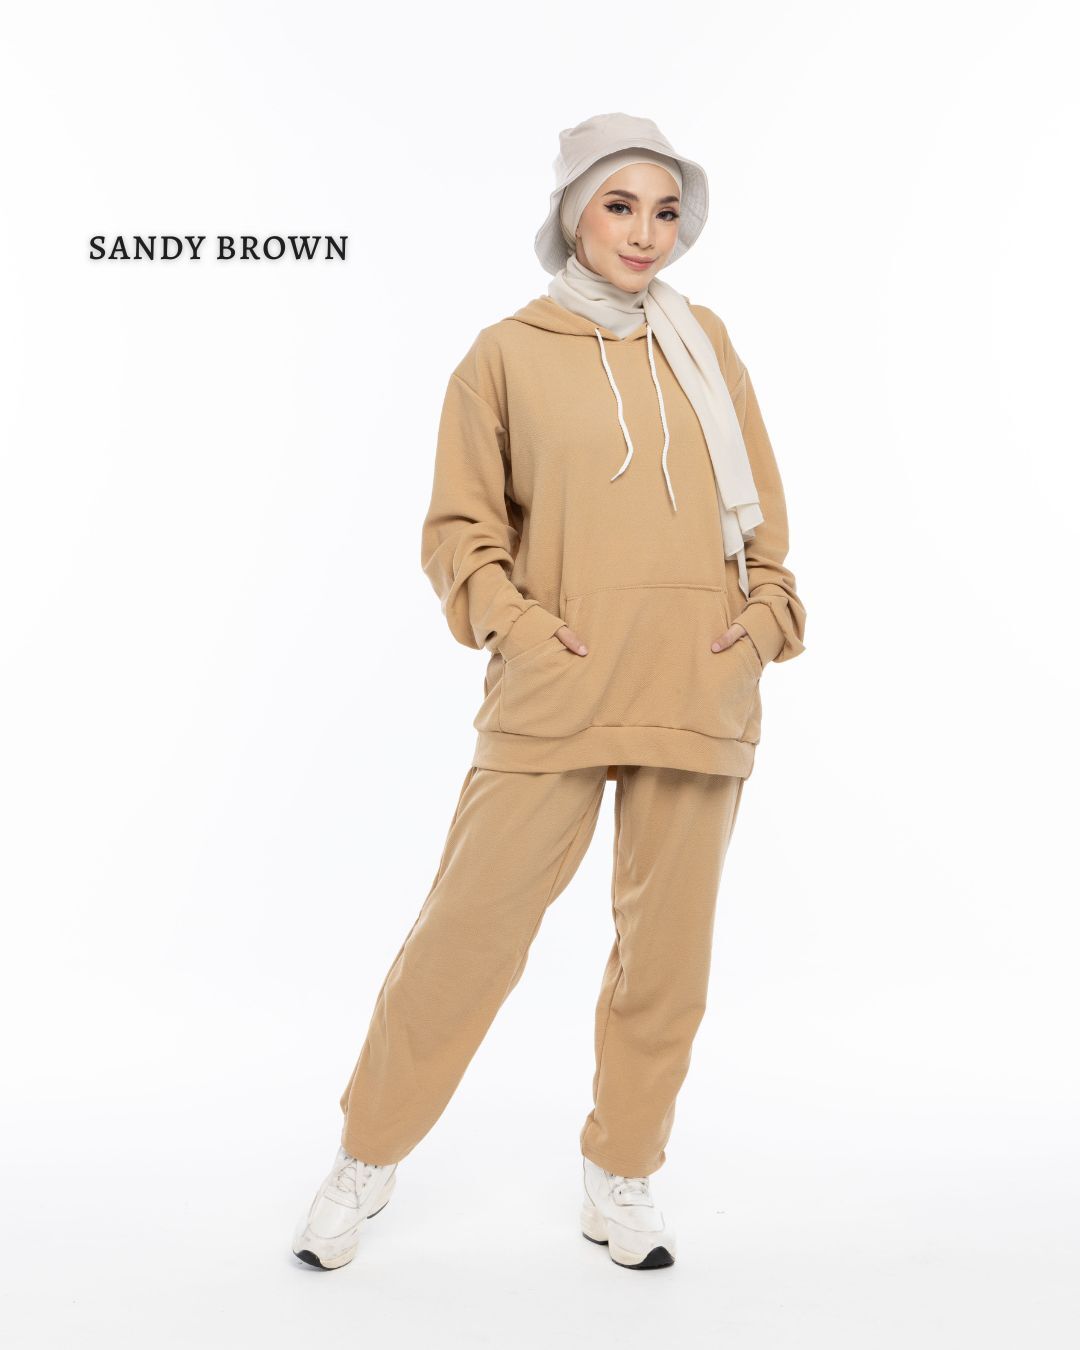 haura-wear-cotton-baju-muslimah-set-seluar-suit-muslimah-set-baju-dan-seluar-muslimah-palazzo (3)